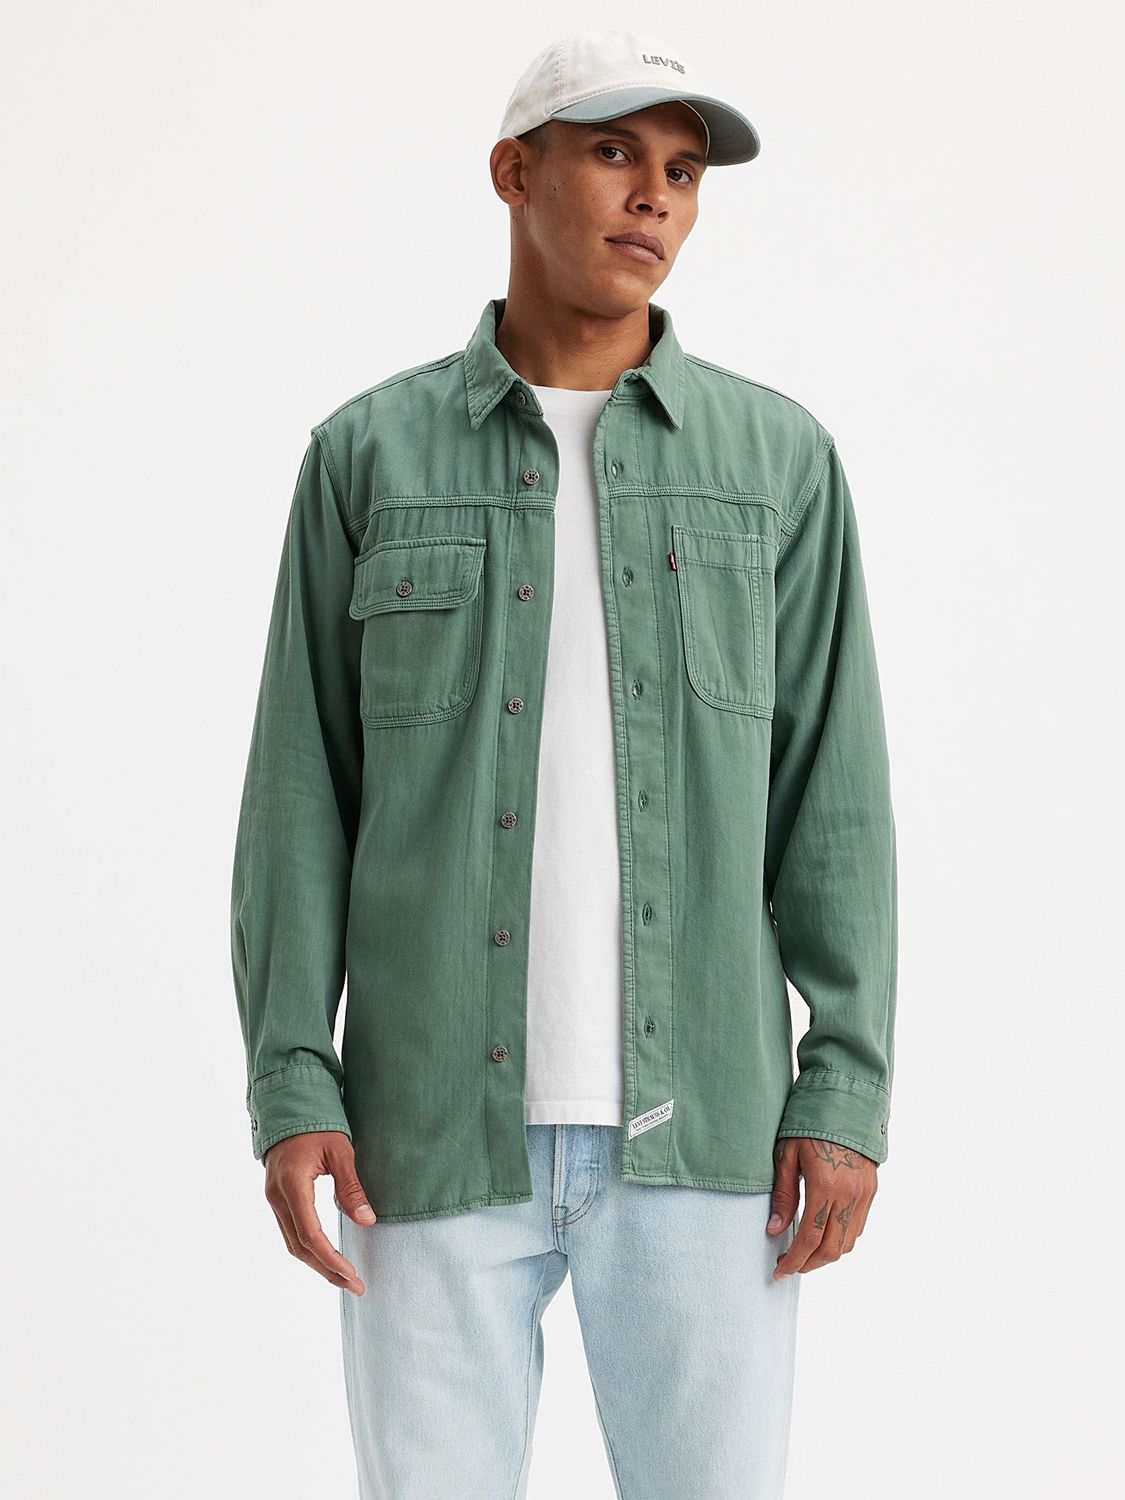 Levi's Long Sleeve Auburn Worker Shirt, Green, S